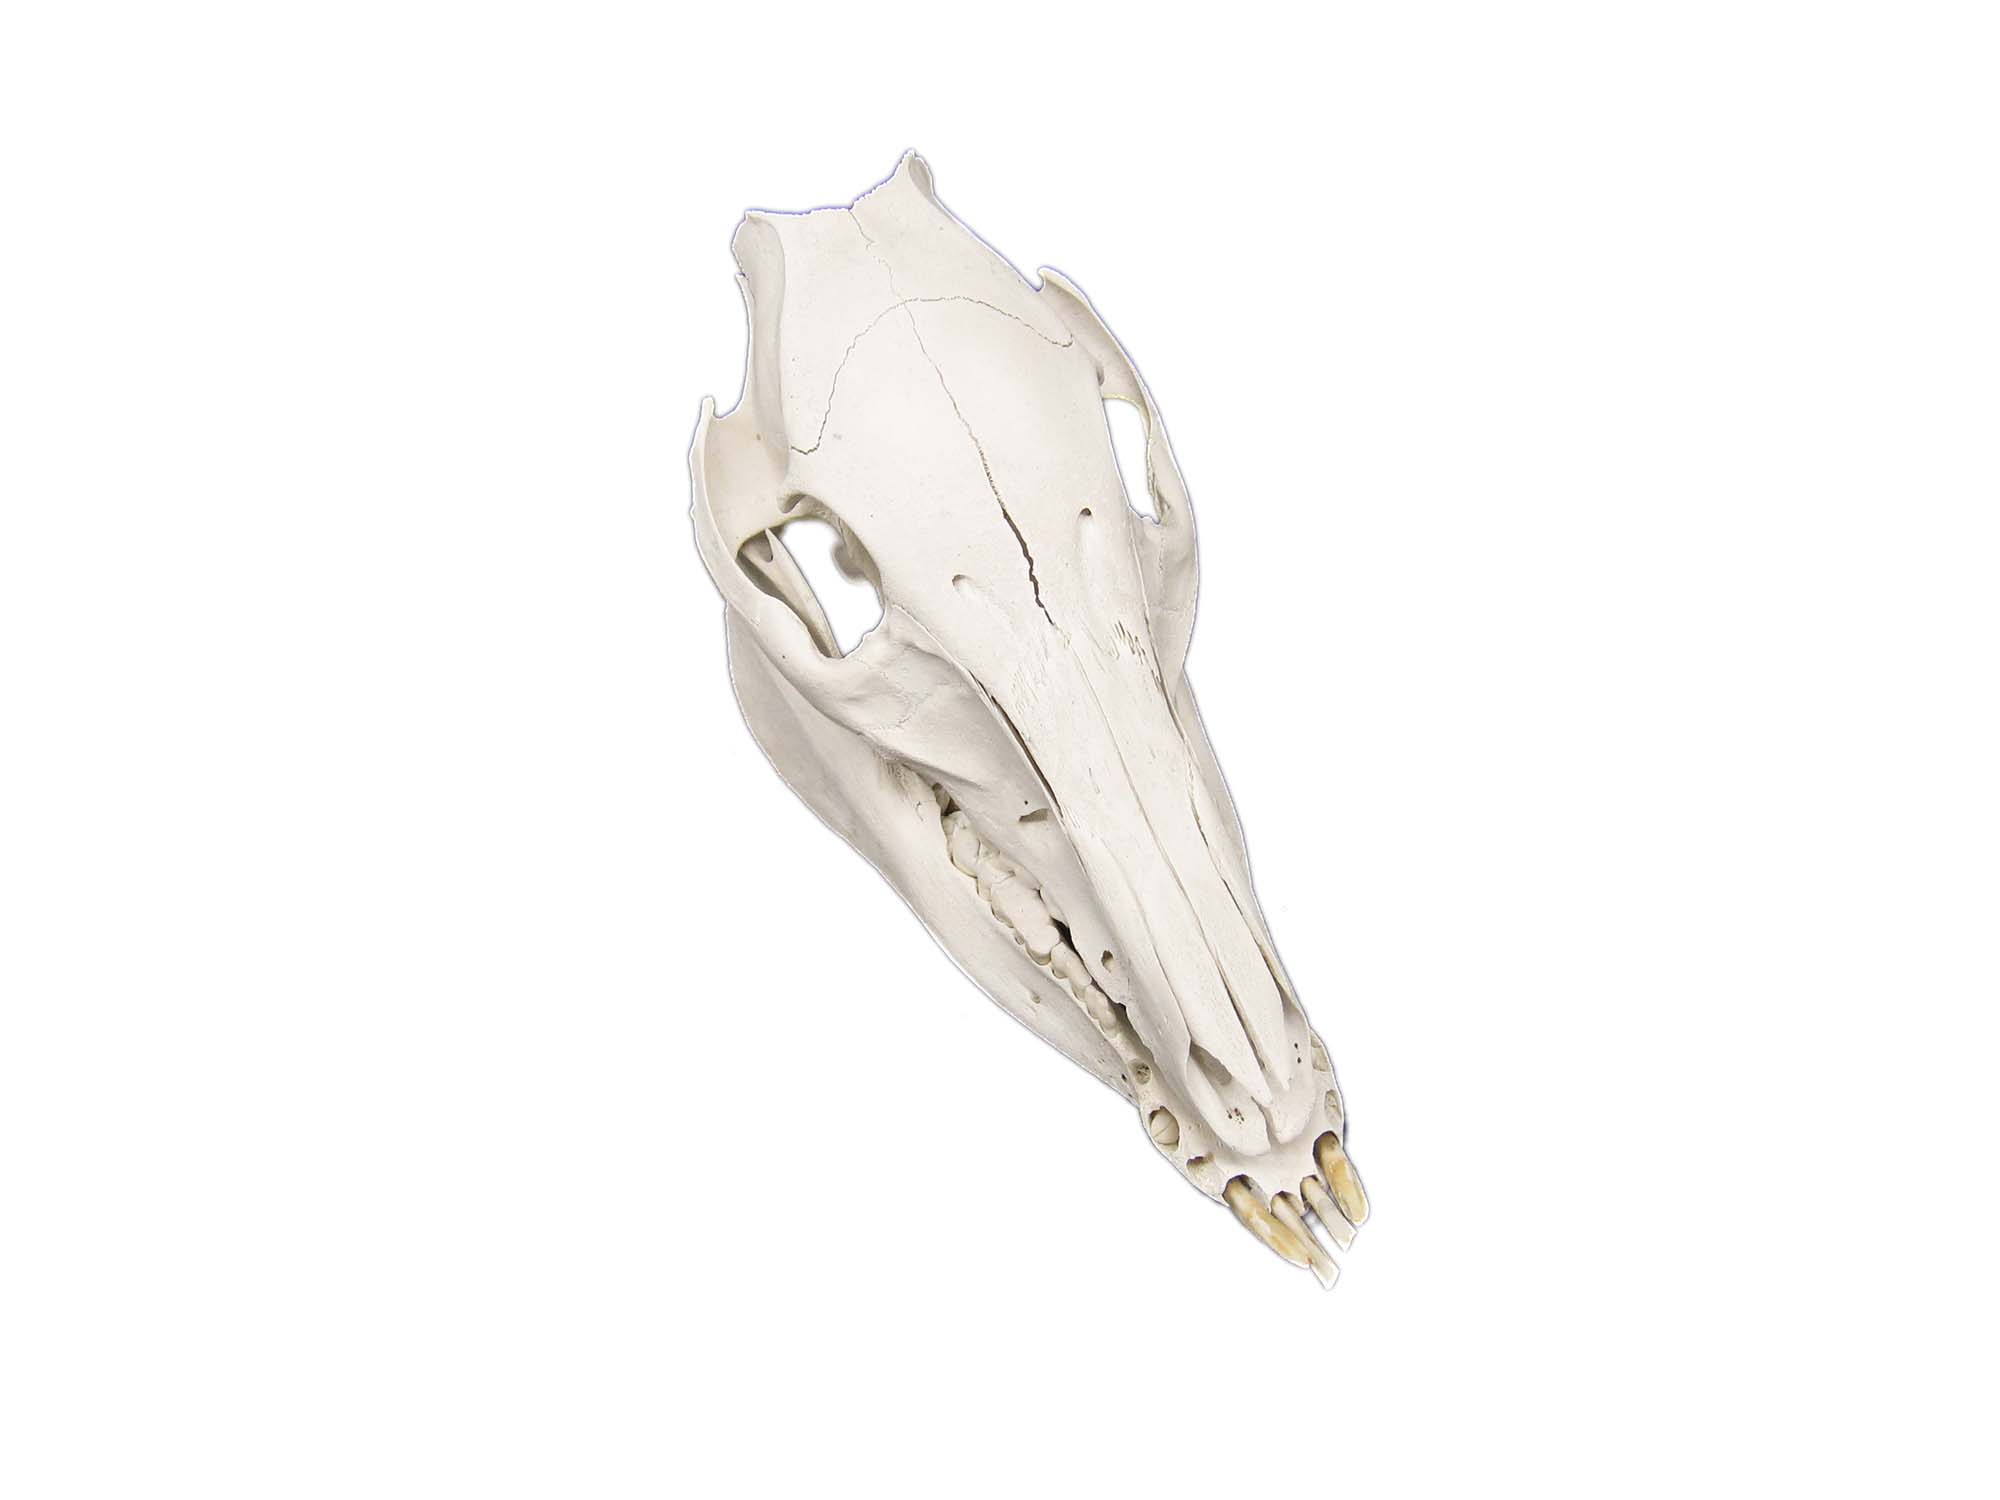 Wild Boar Skull with tusks: Gallery Item 